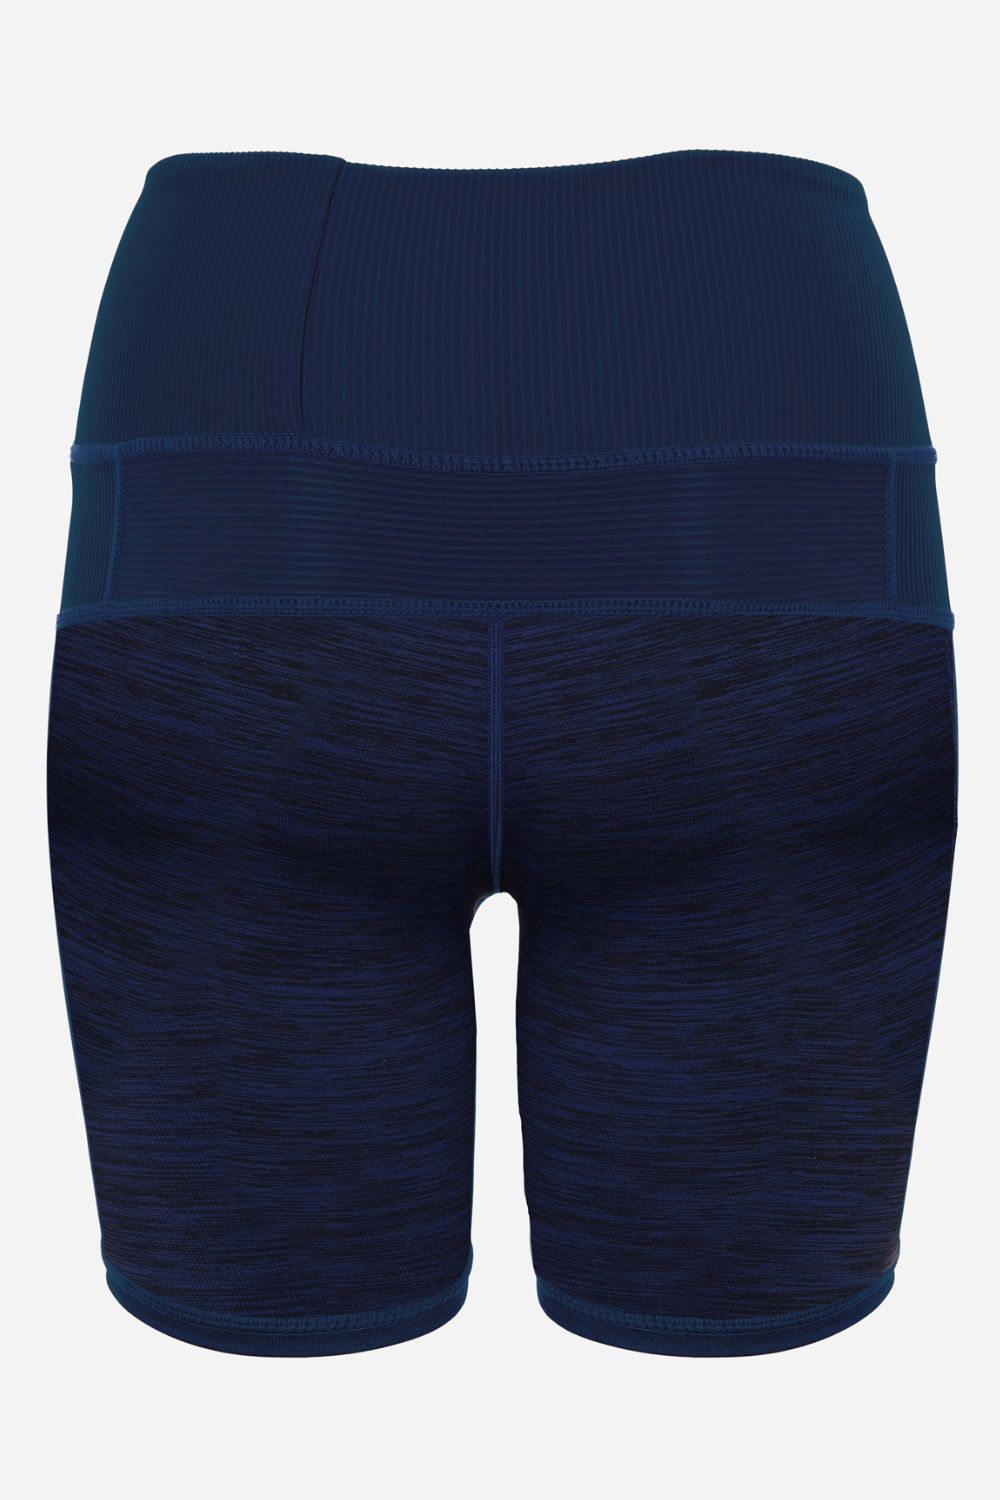 T1340-03 | Damen Sport Shorts recyclet - Navy